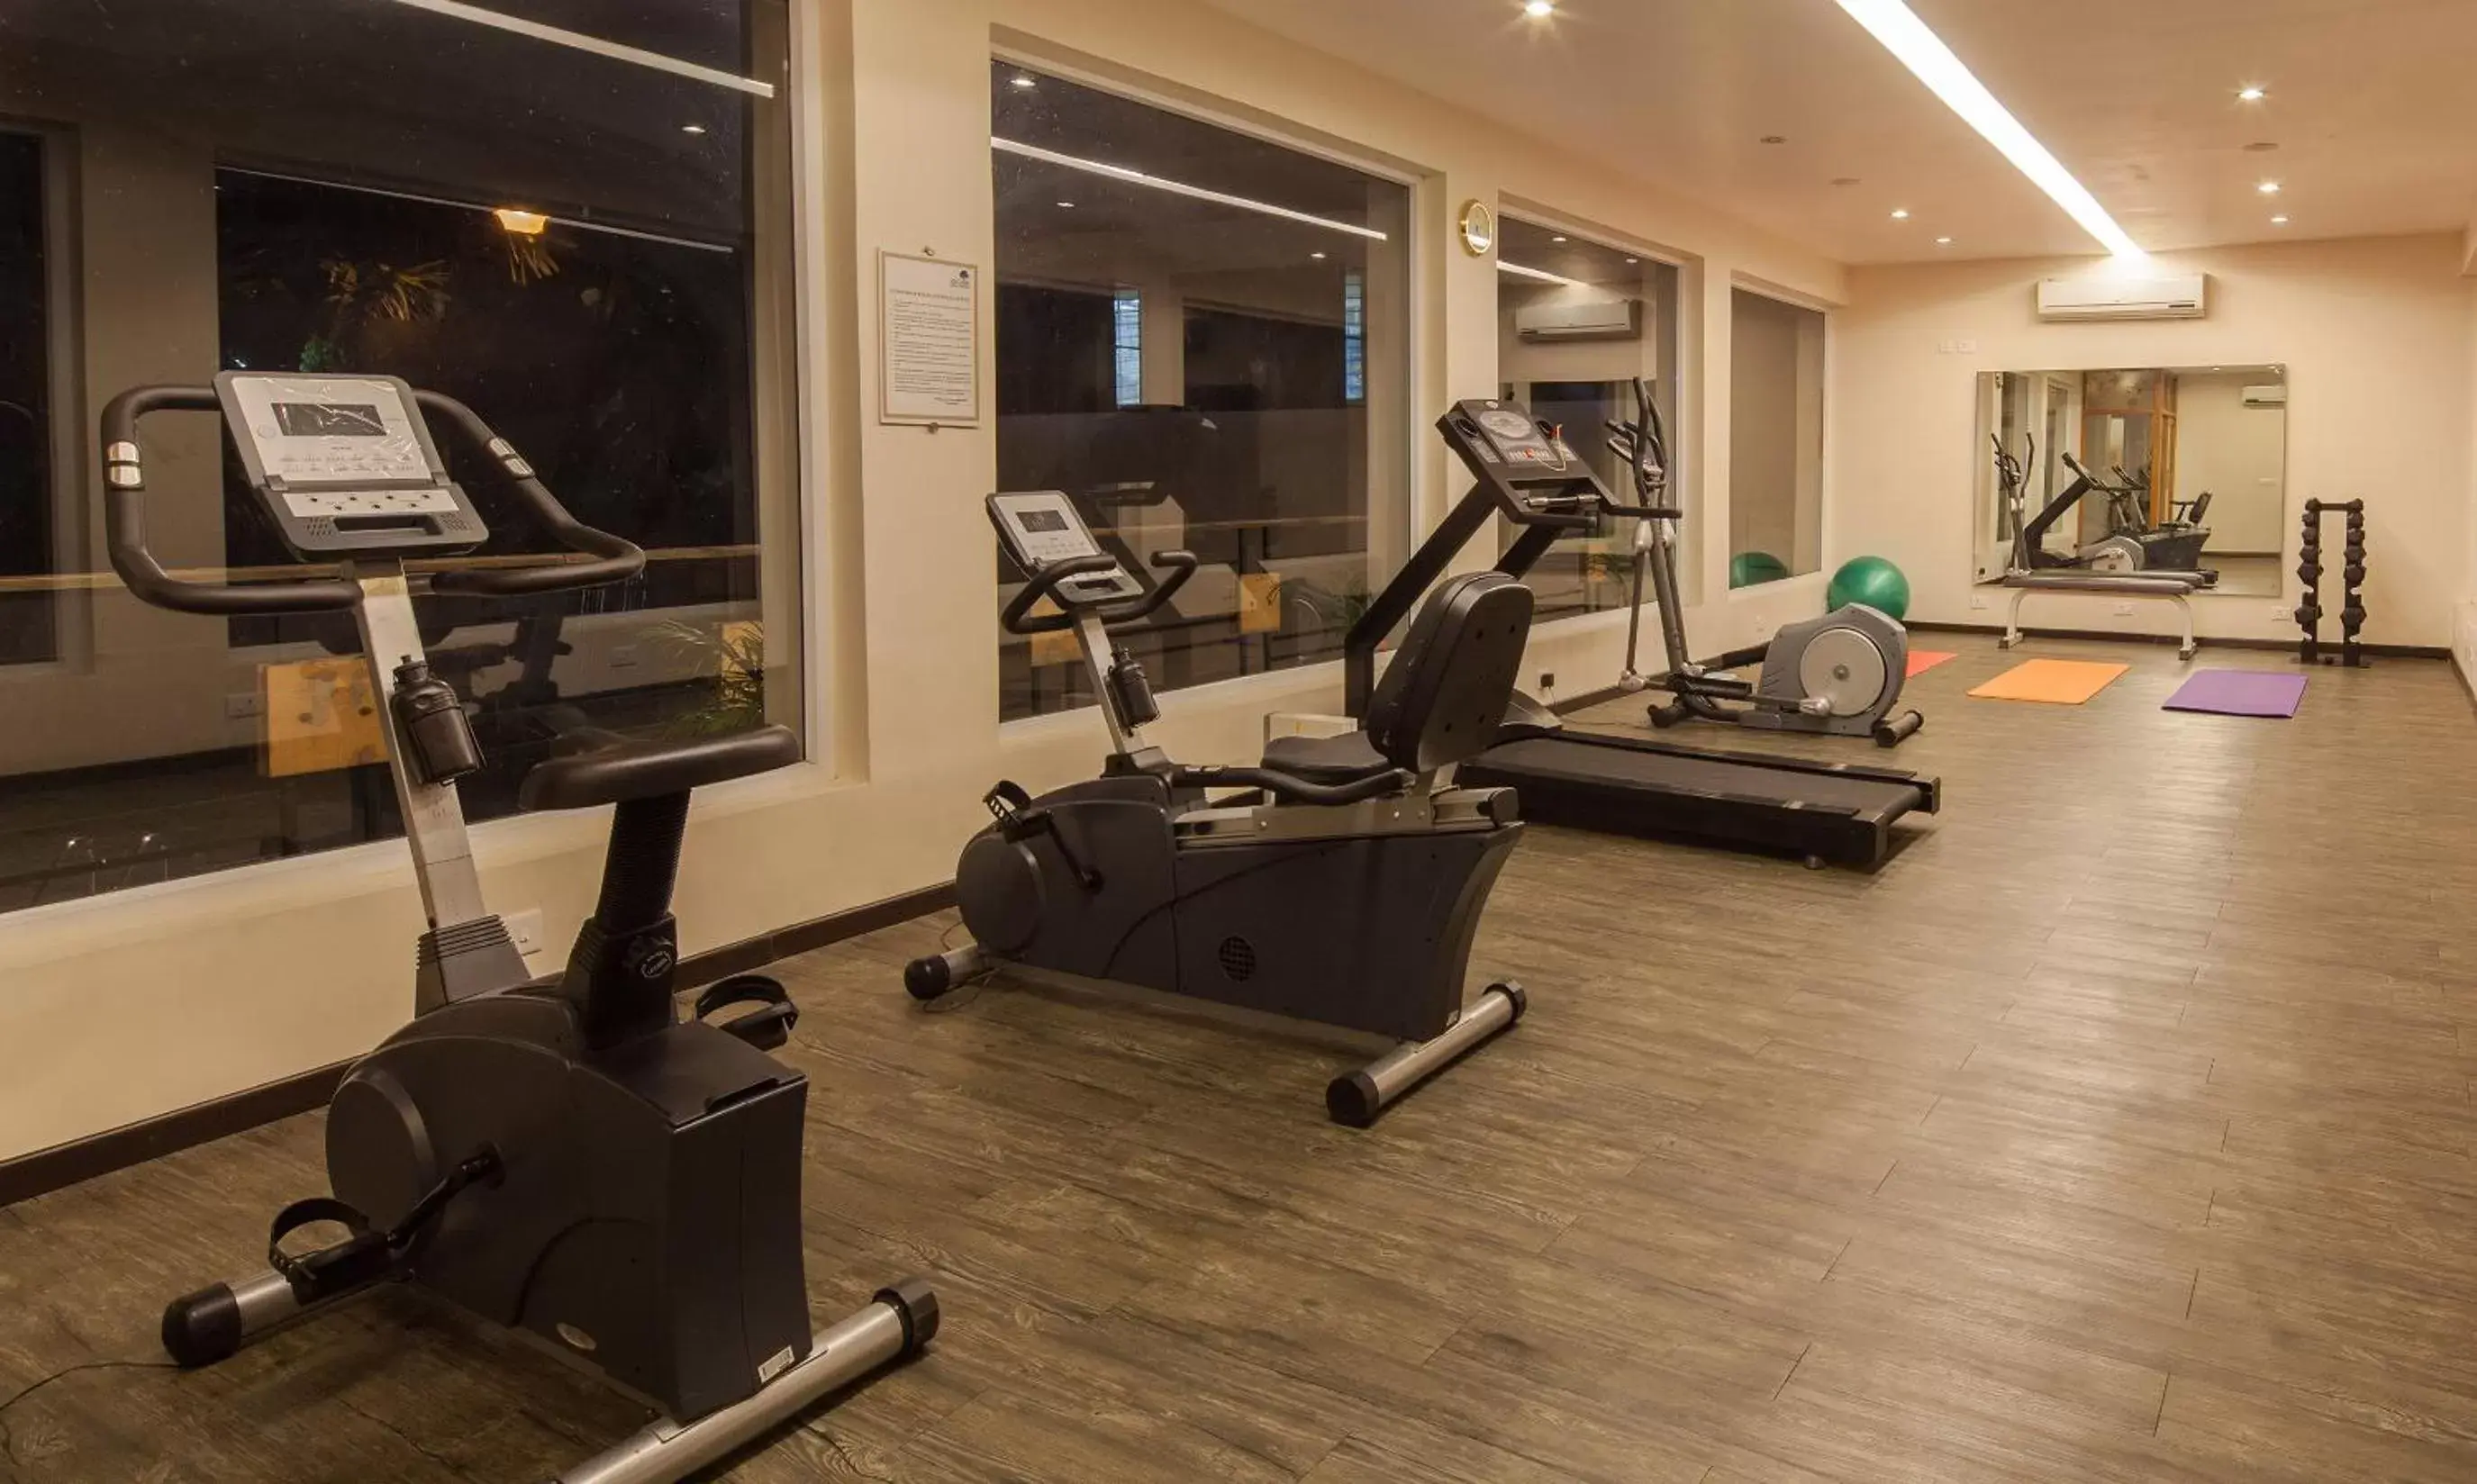 Fitness centre/facilities, Fitness Center/Facilities in Sinclairs Siliguri